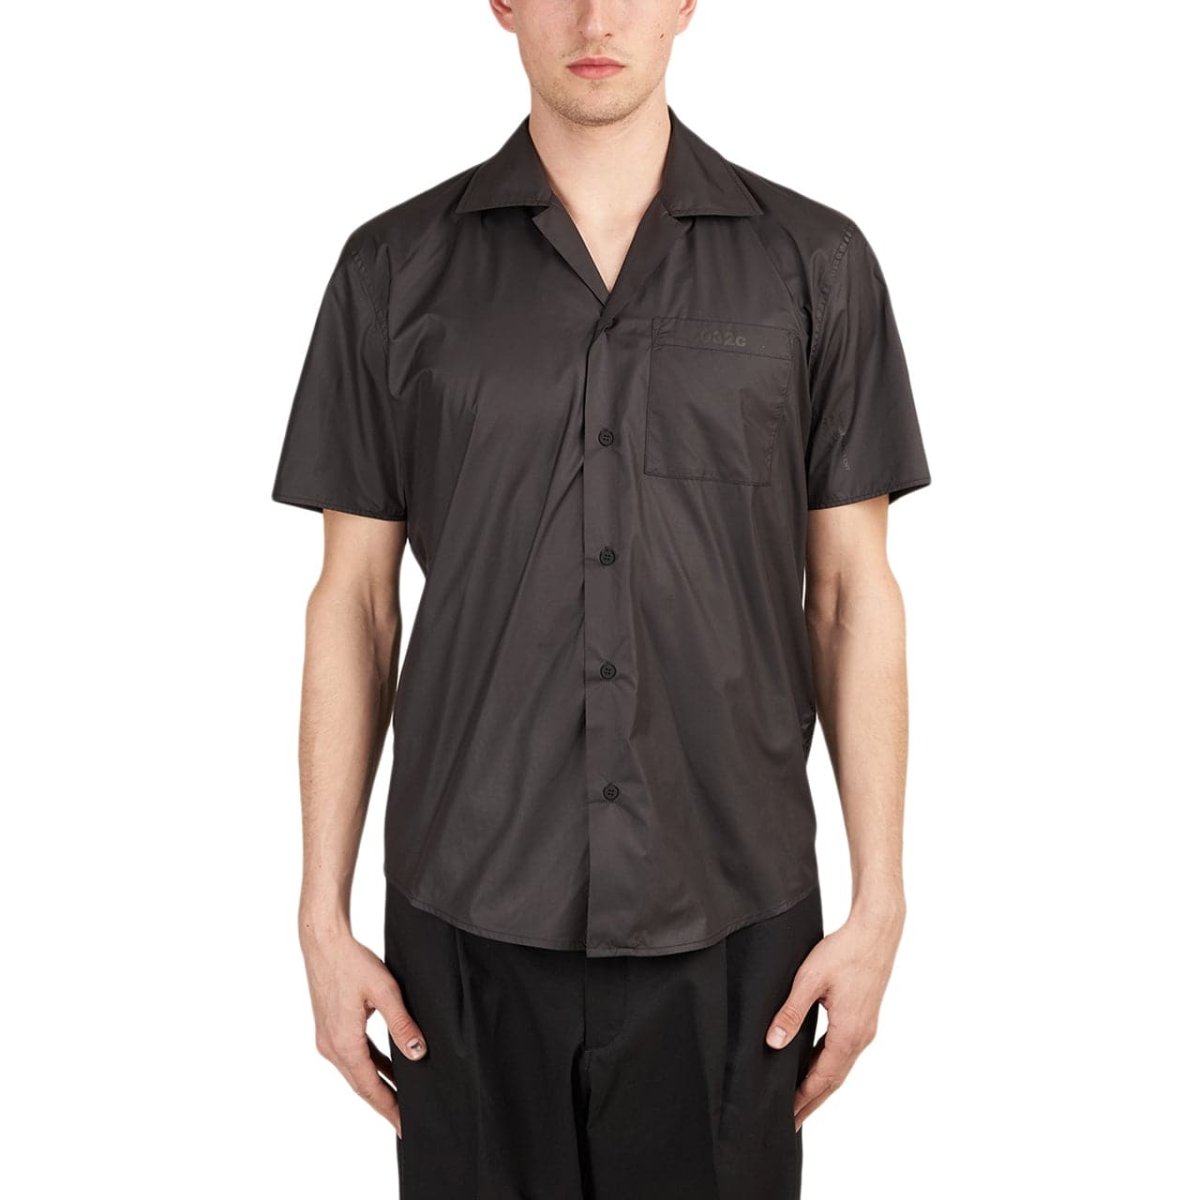 Image of 032c Bowling Shirt (Black)